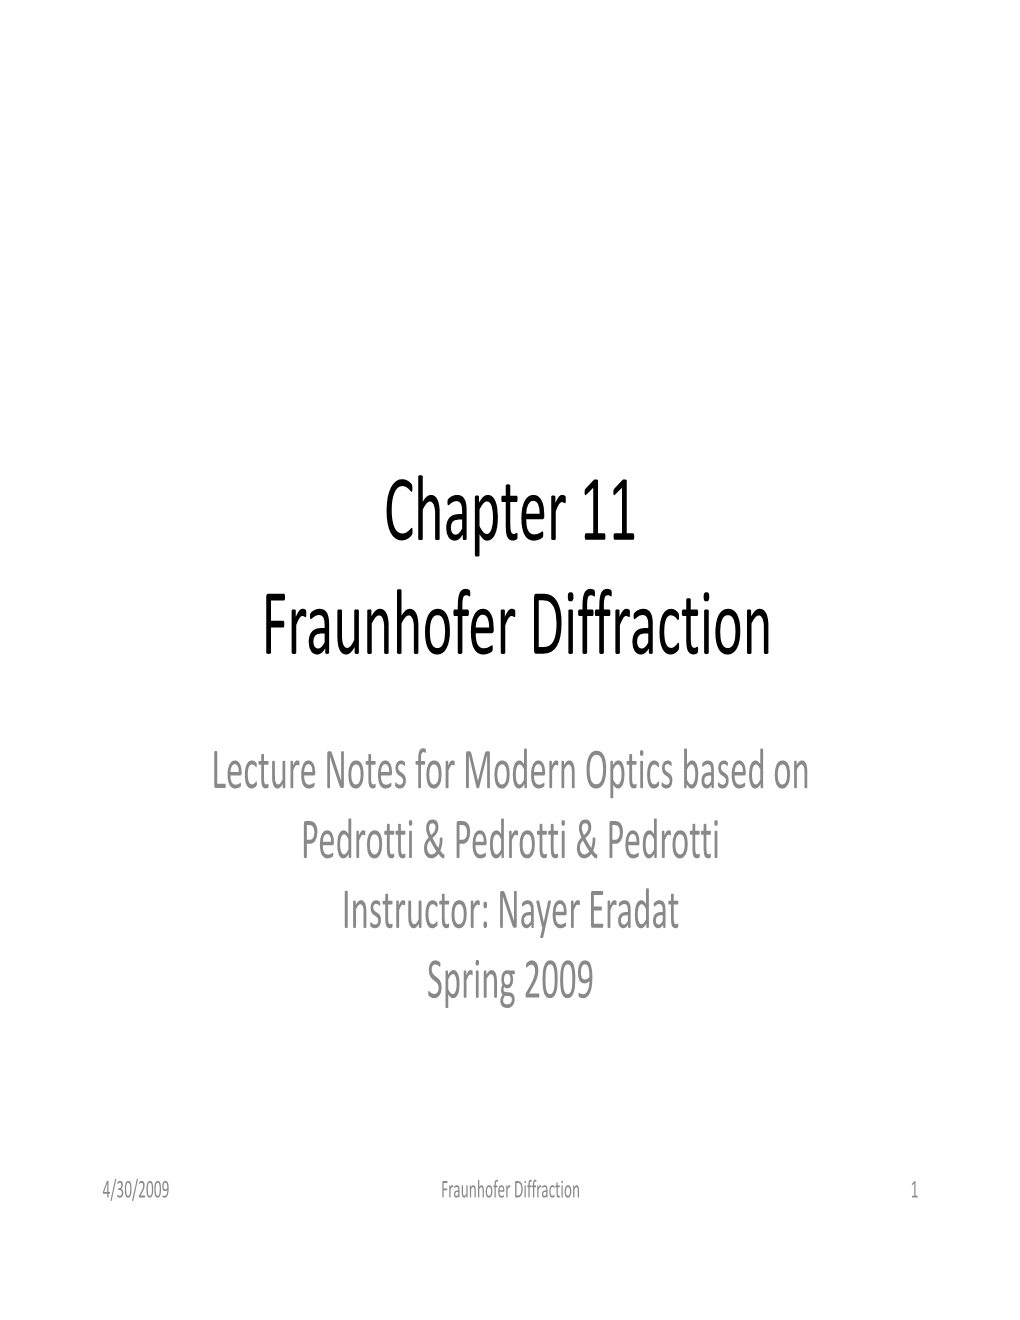 Chapter 11 Fraunhofer Diffraction